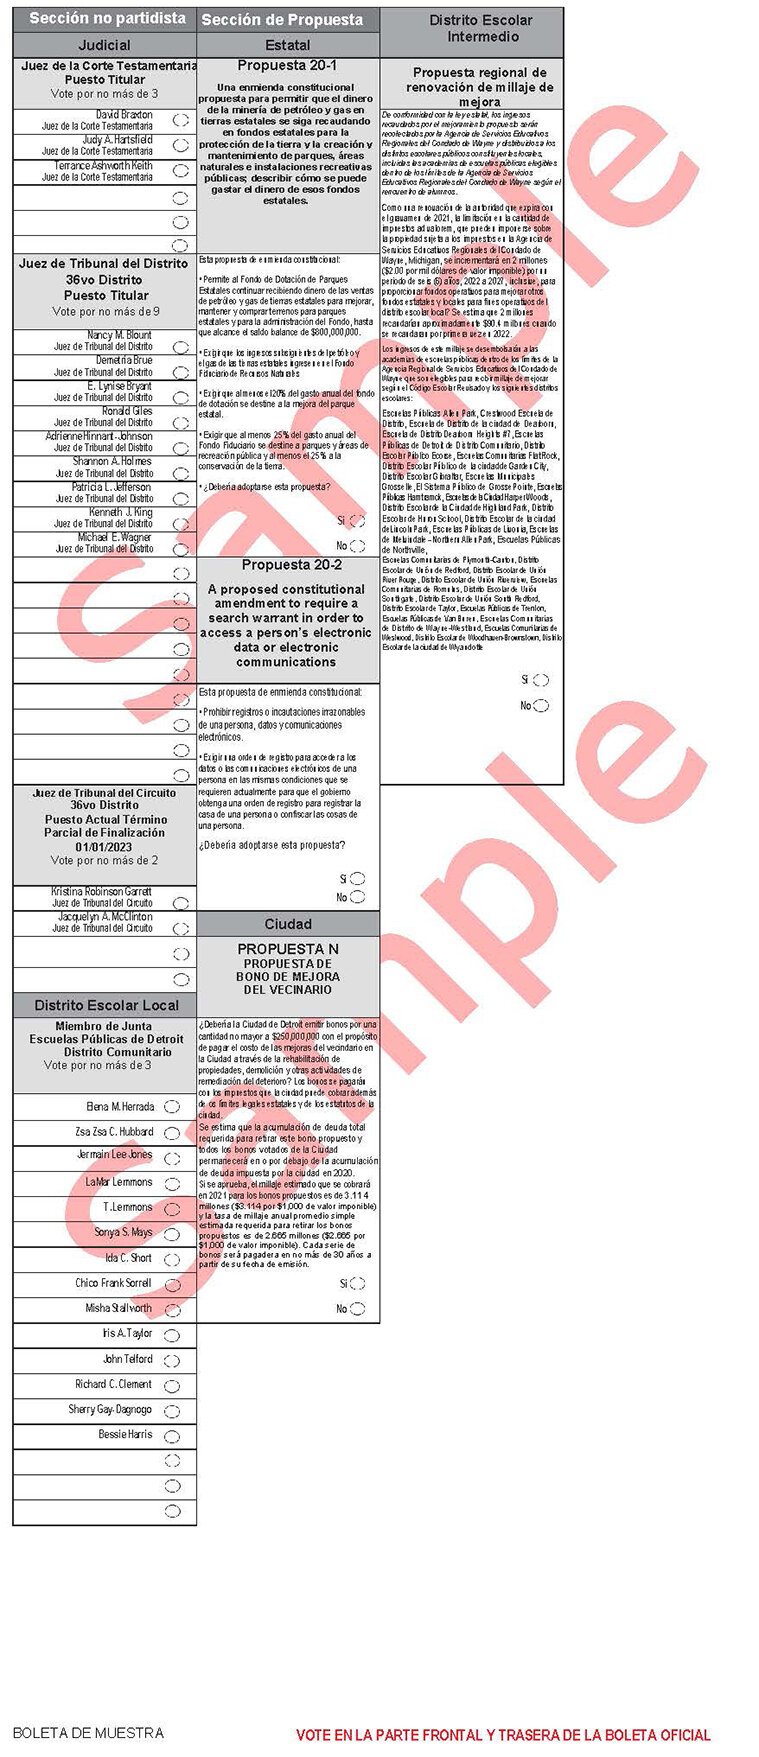 A sample ballot for Precinct 424 in Detroit.